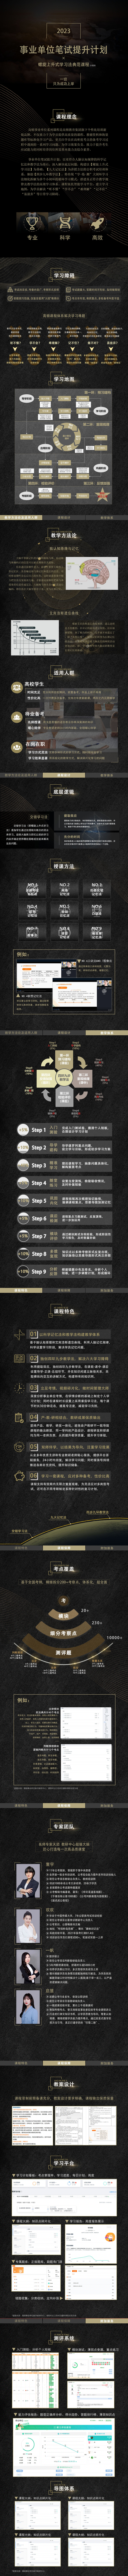 https://simg01.gaodunwangxiao.com/uploadfiles/product-center/202211/27/4e9c6_20221127203040.jpg